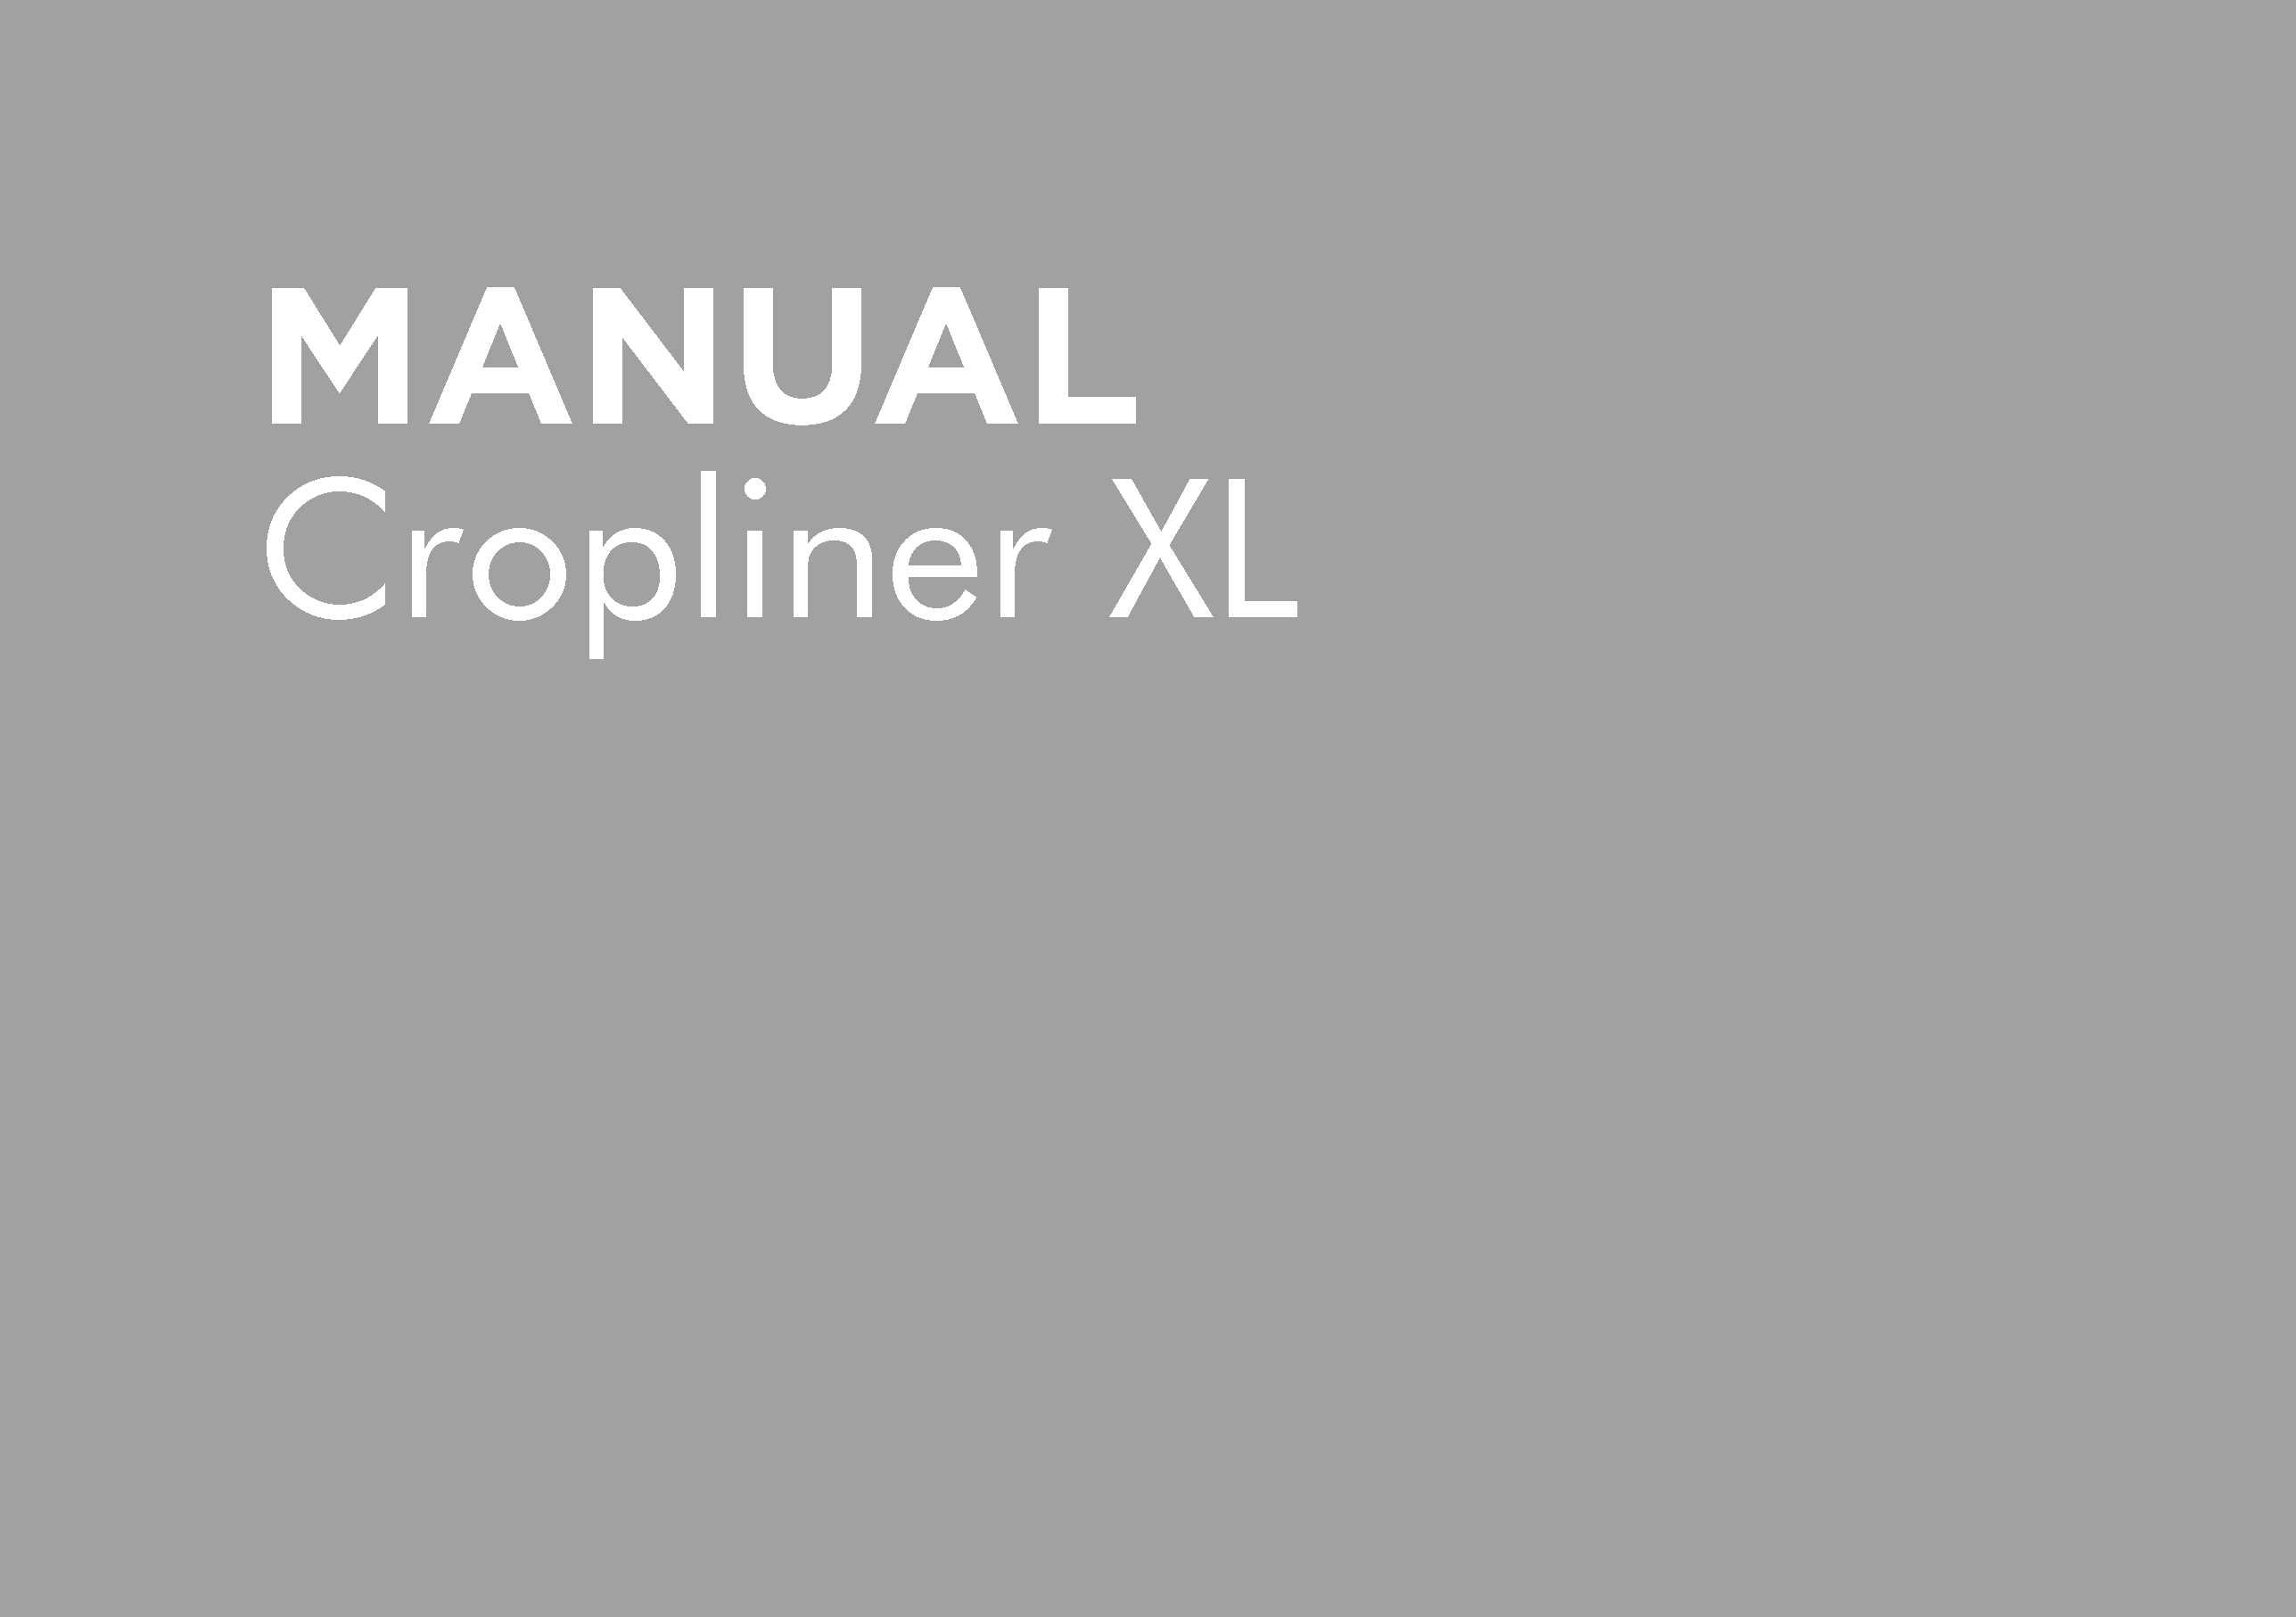 MANUAL CROPLINER XL